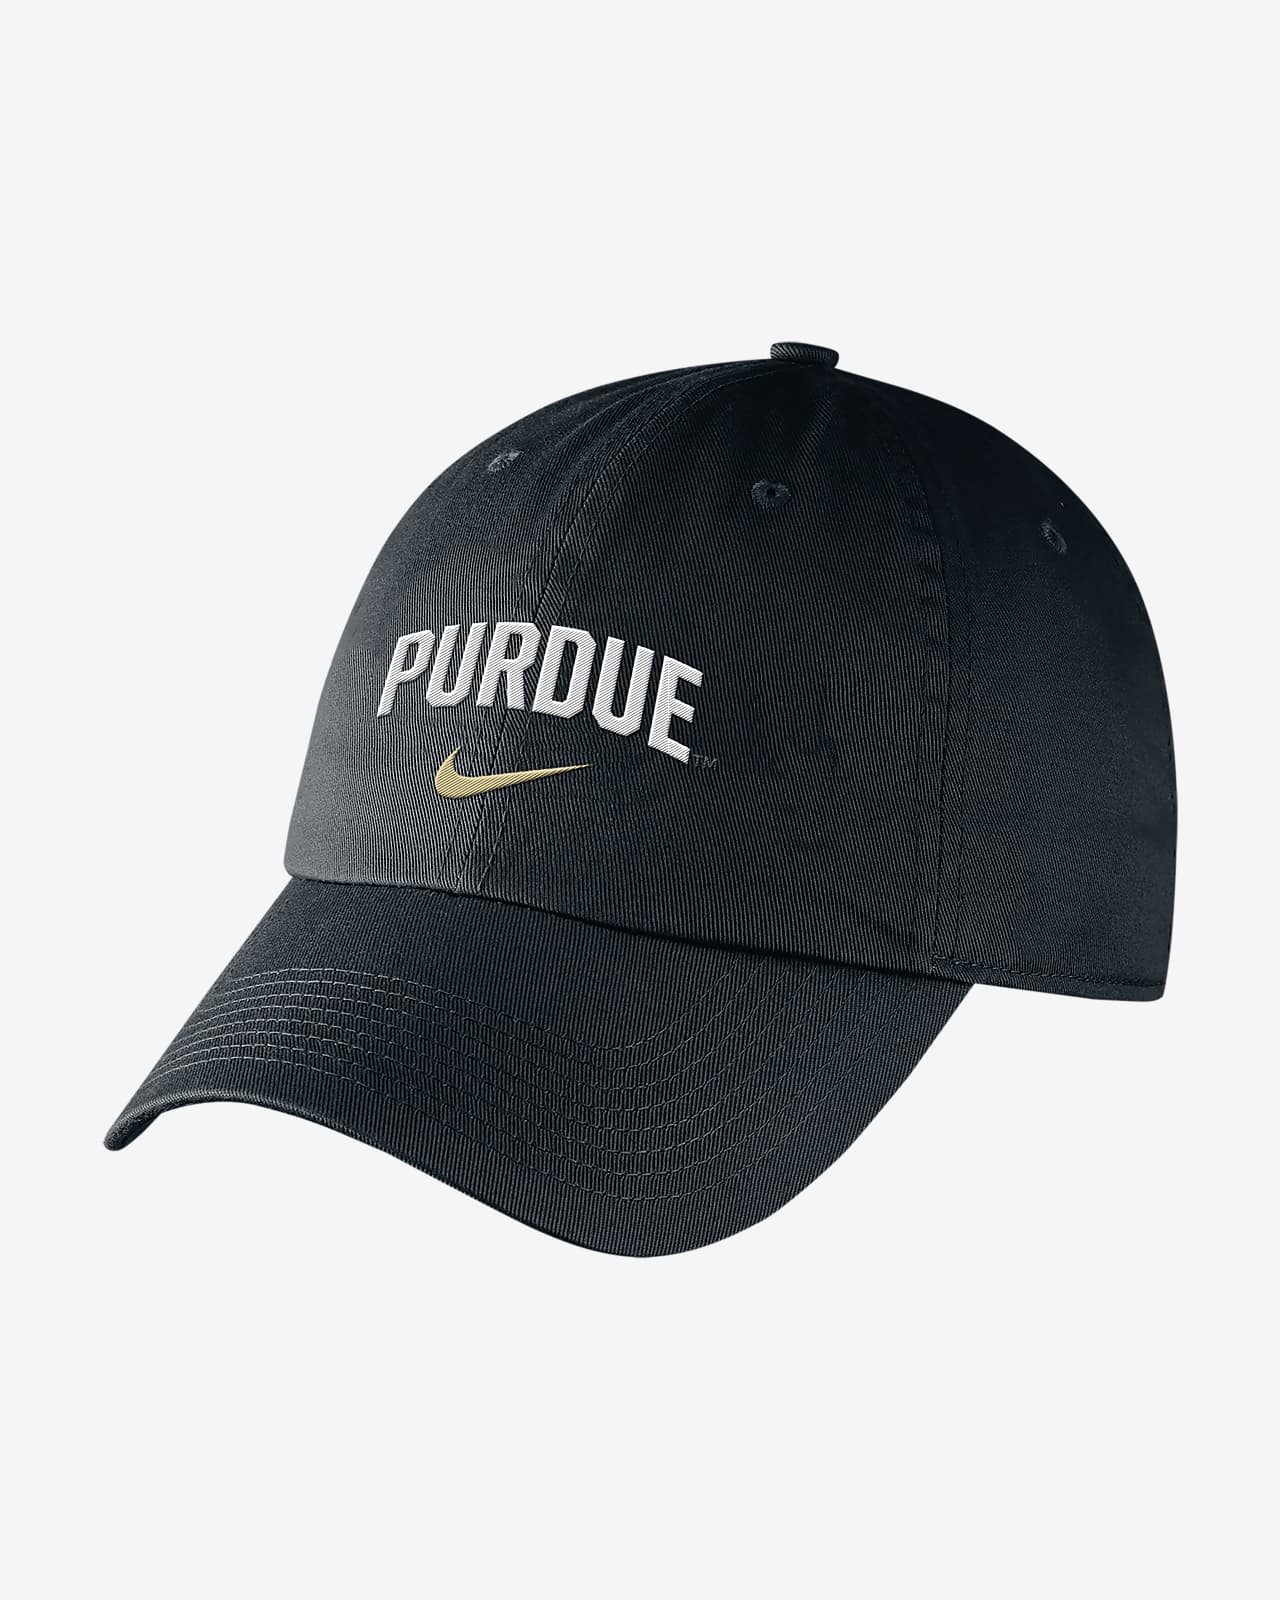 Nike College (Purdue) Hat